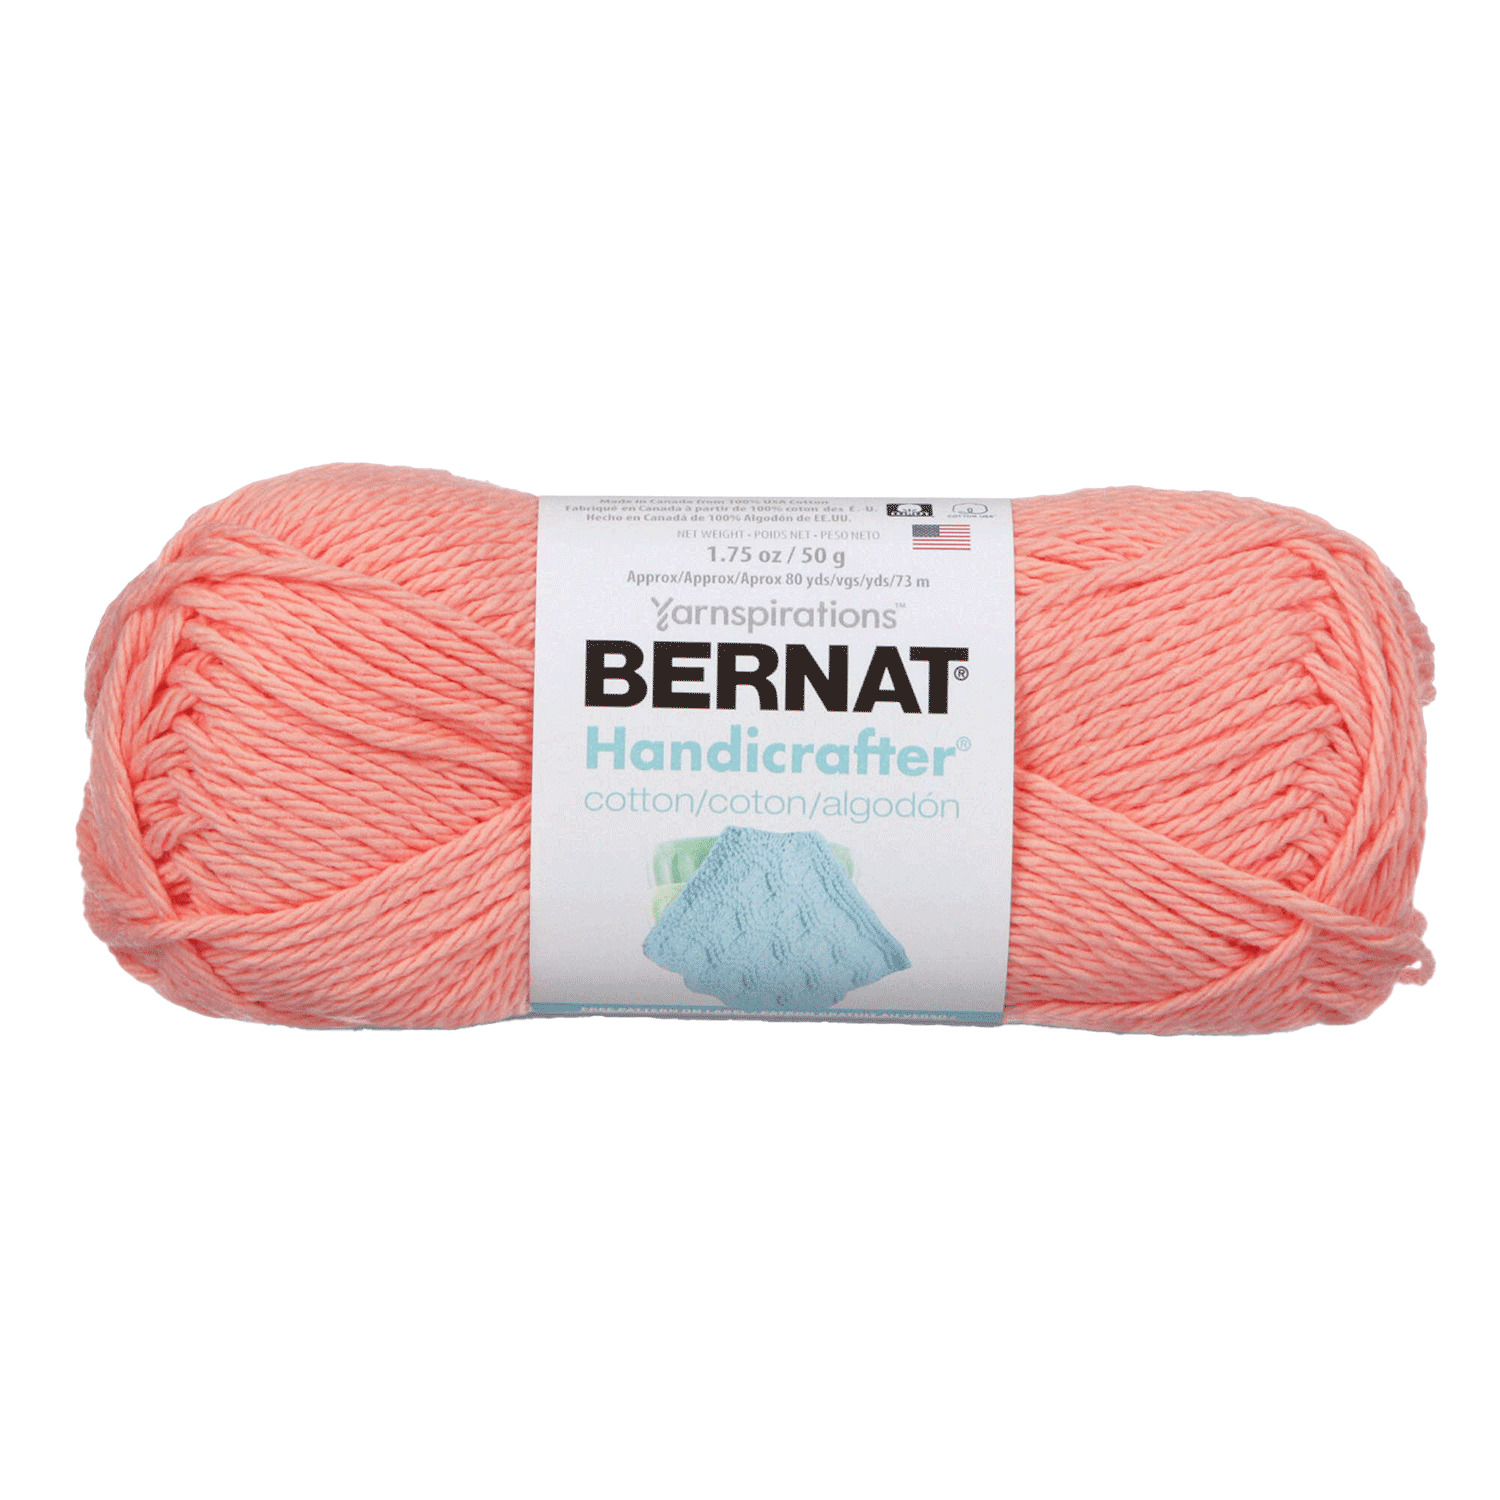 Bernat Handicrafter - Cotton yarn, Coral rose